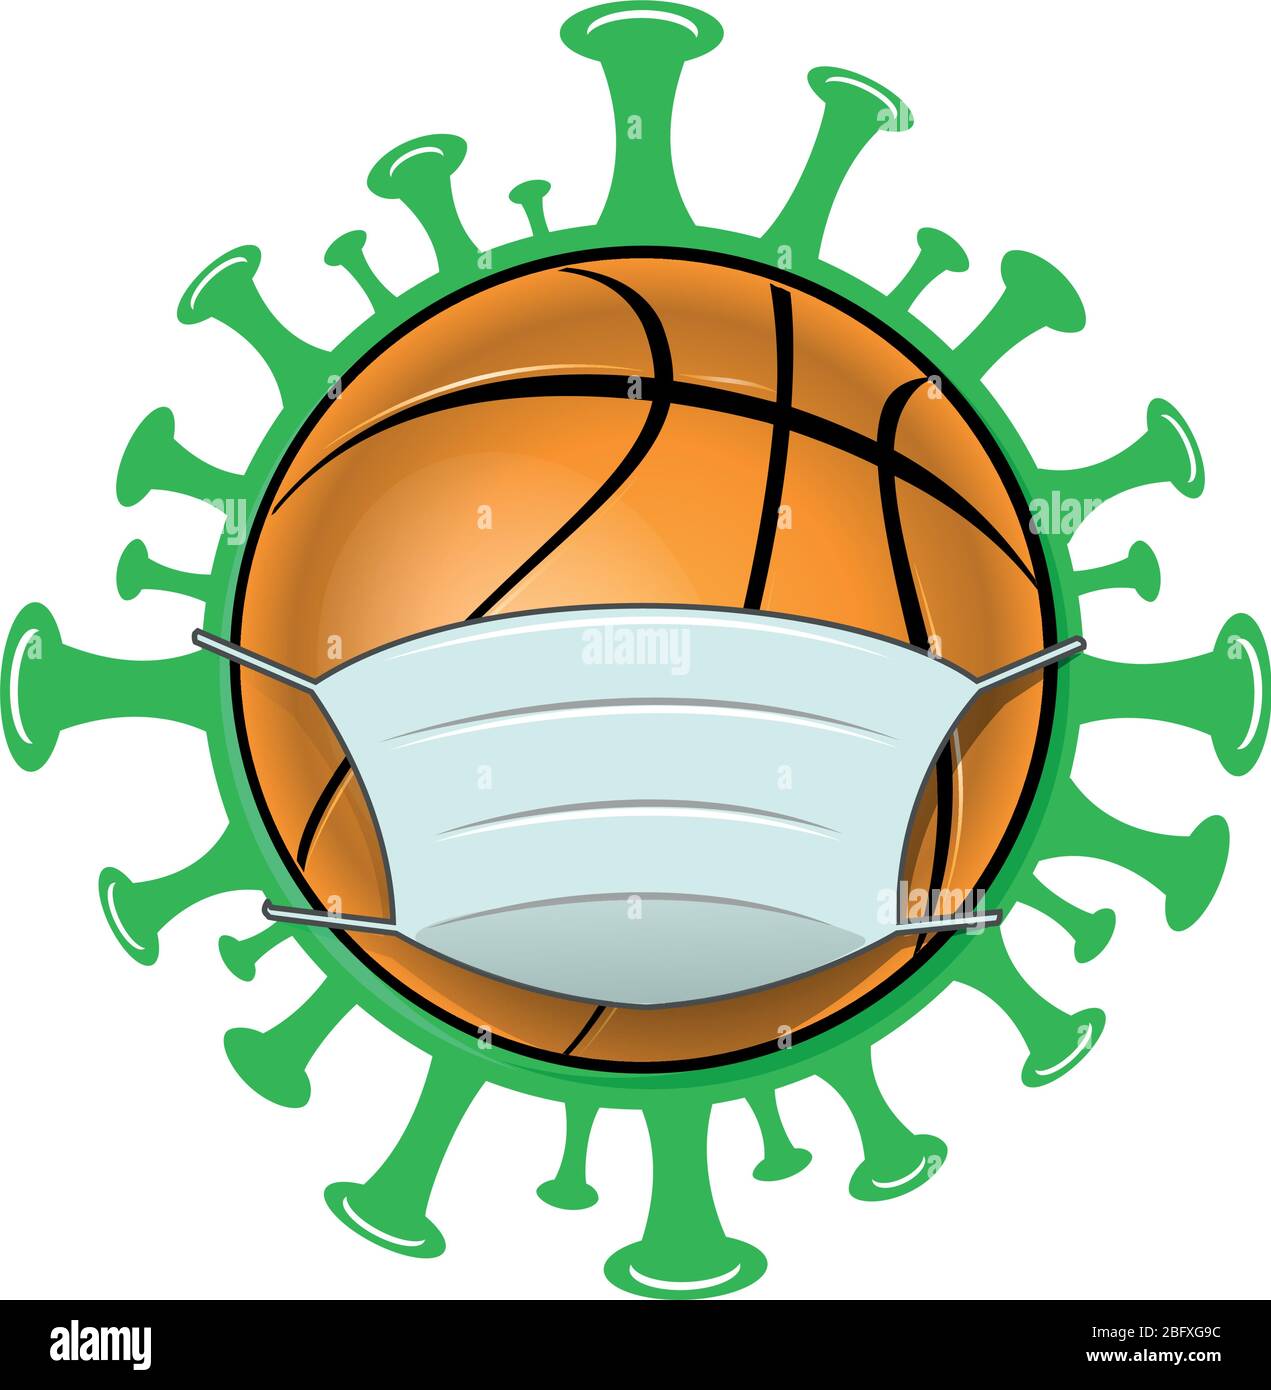 Basketball-Illustration mit Maske über covid19 Hintergrund Stock Vektor